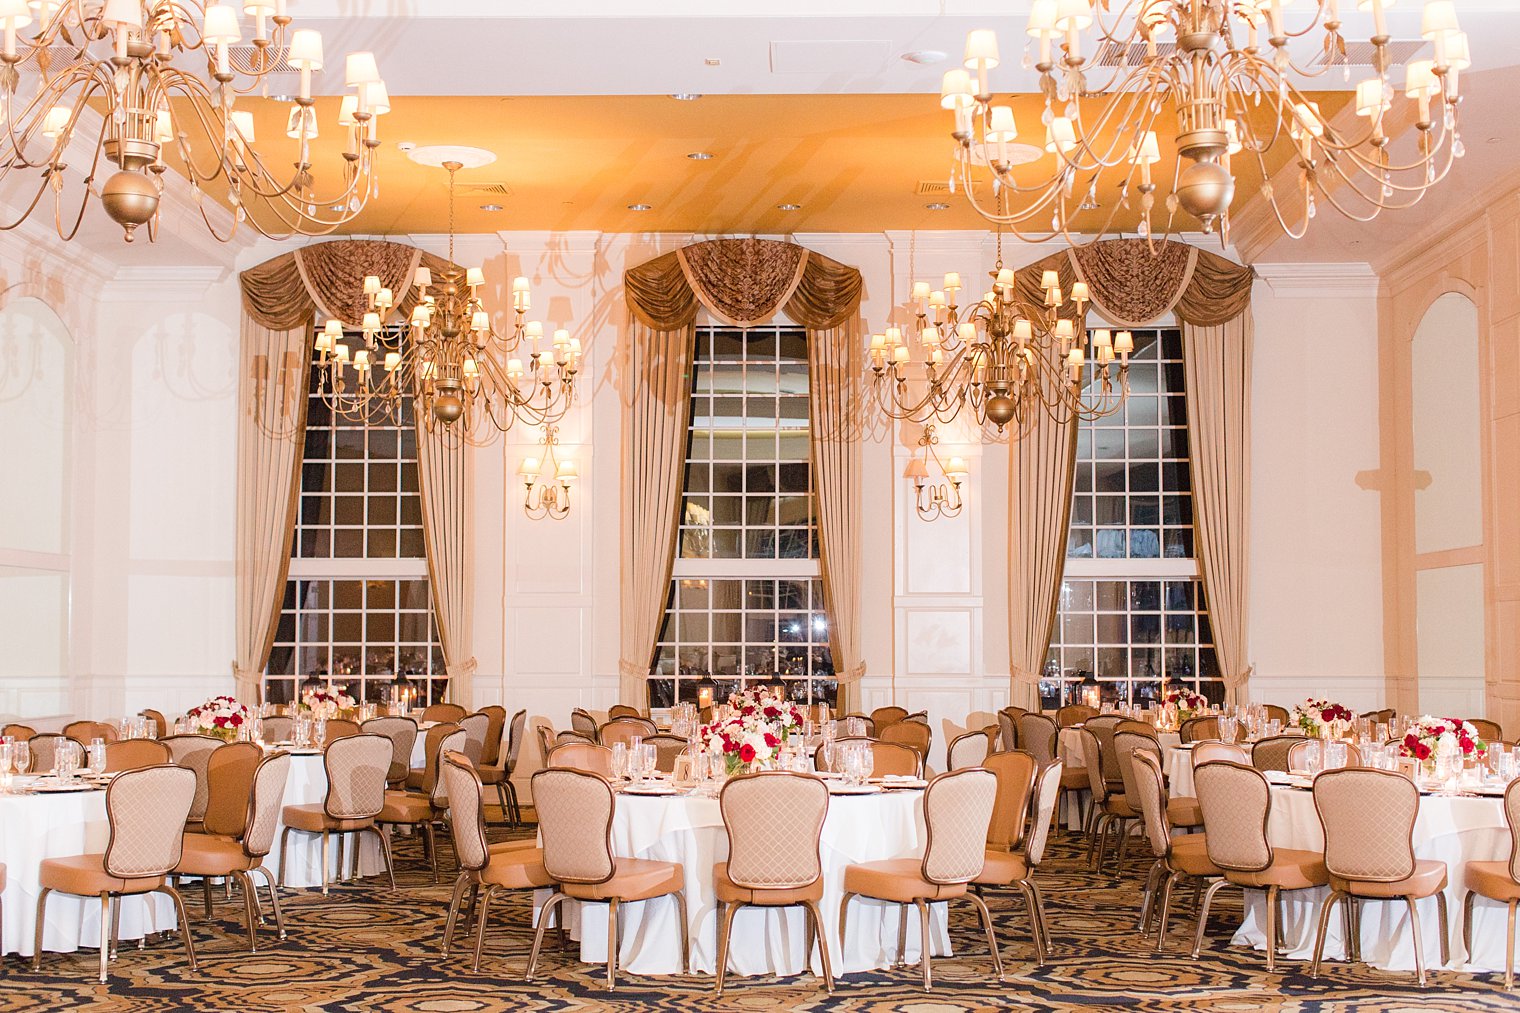 Grand Cascades Lodge Wedding Photos of Elegant Ballroom